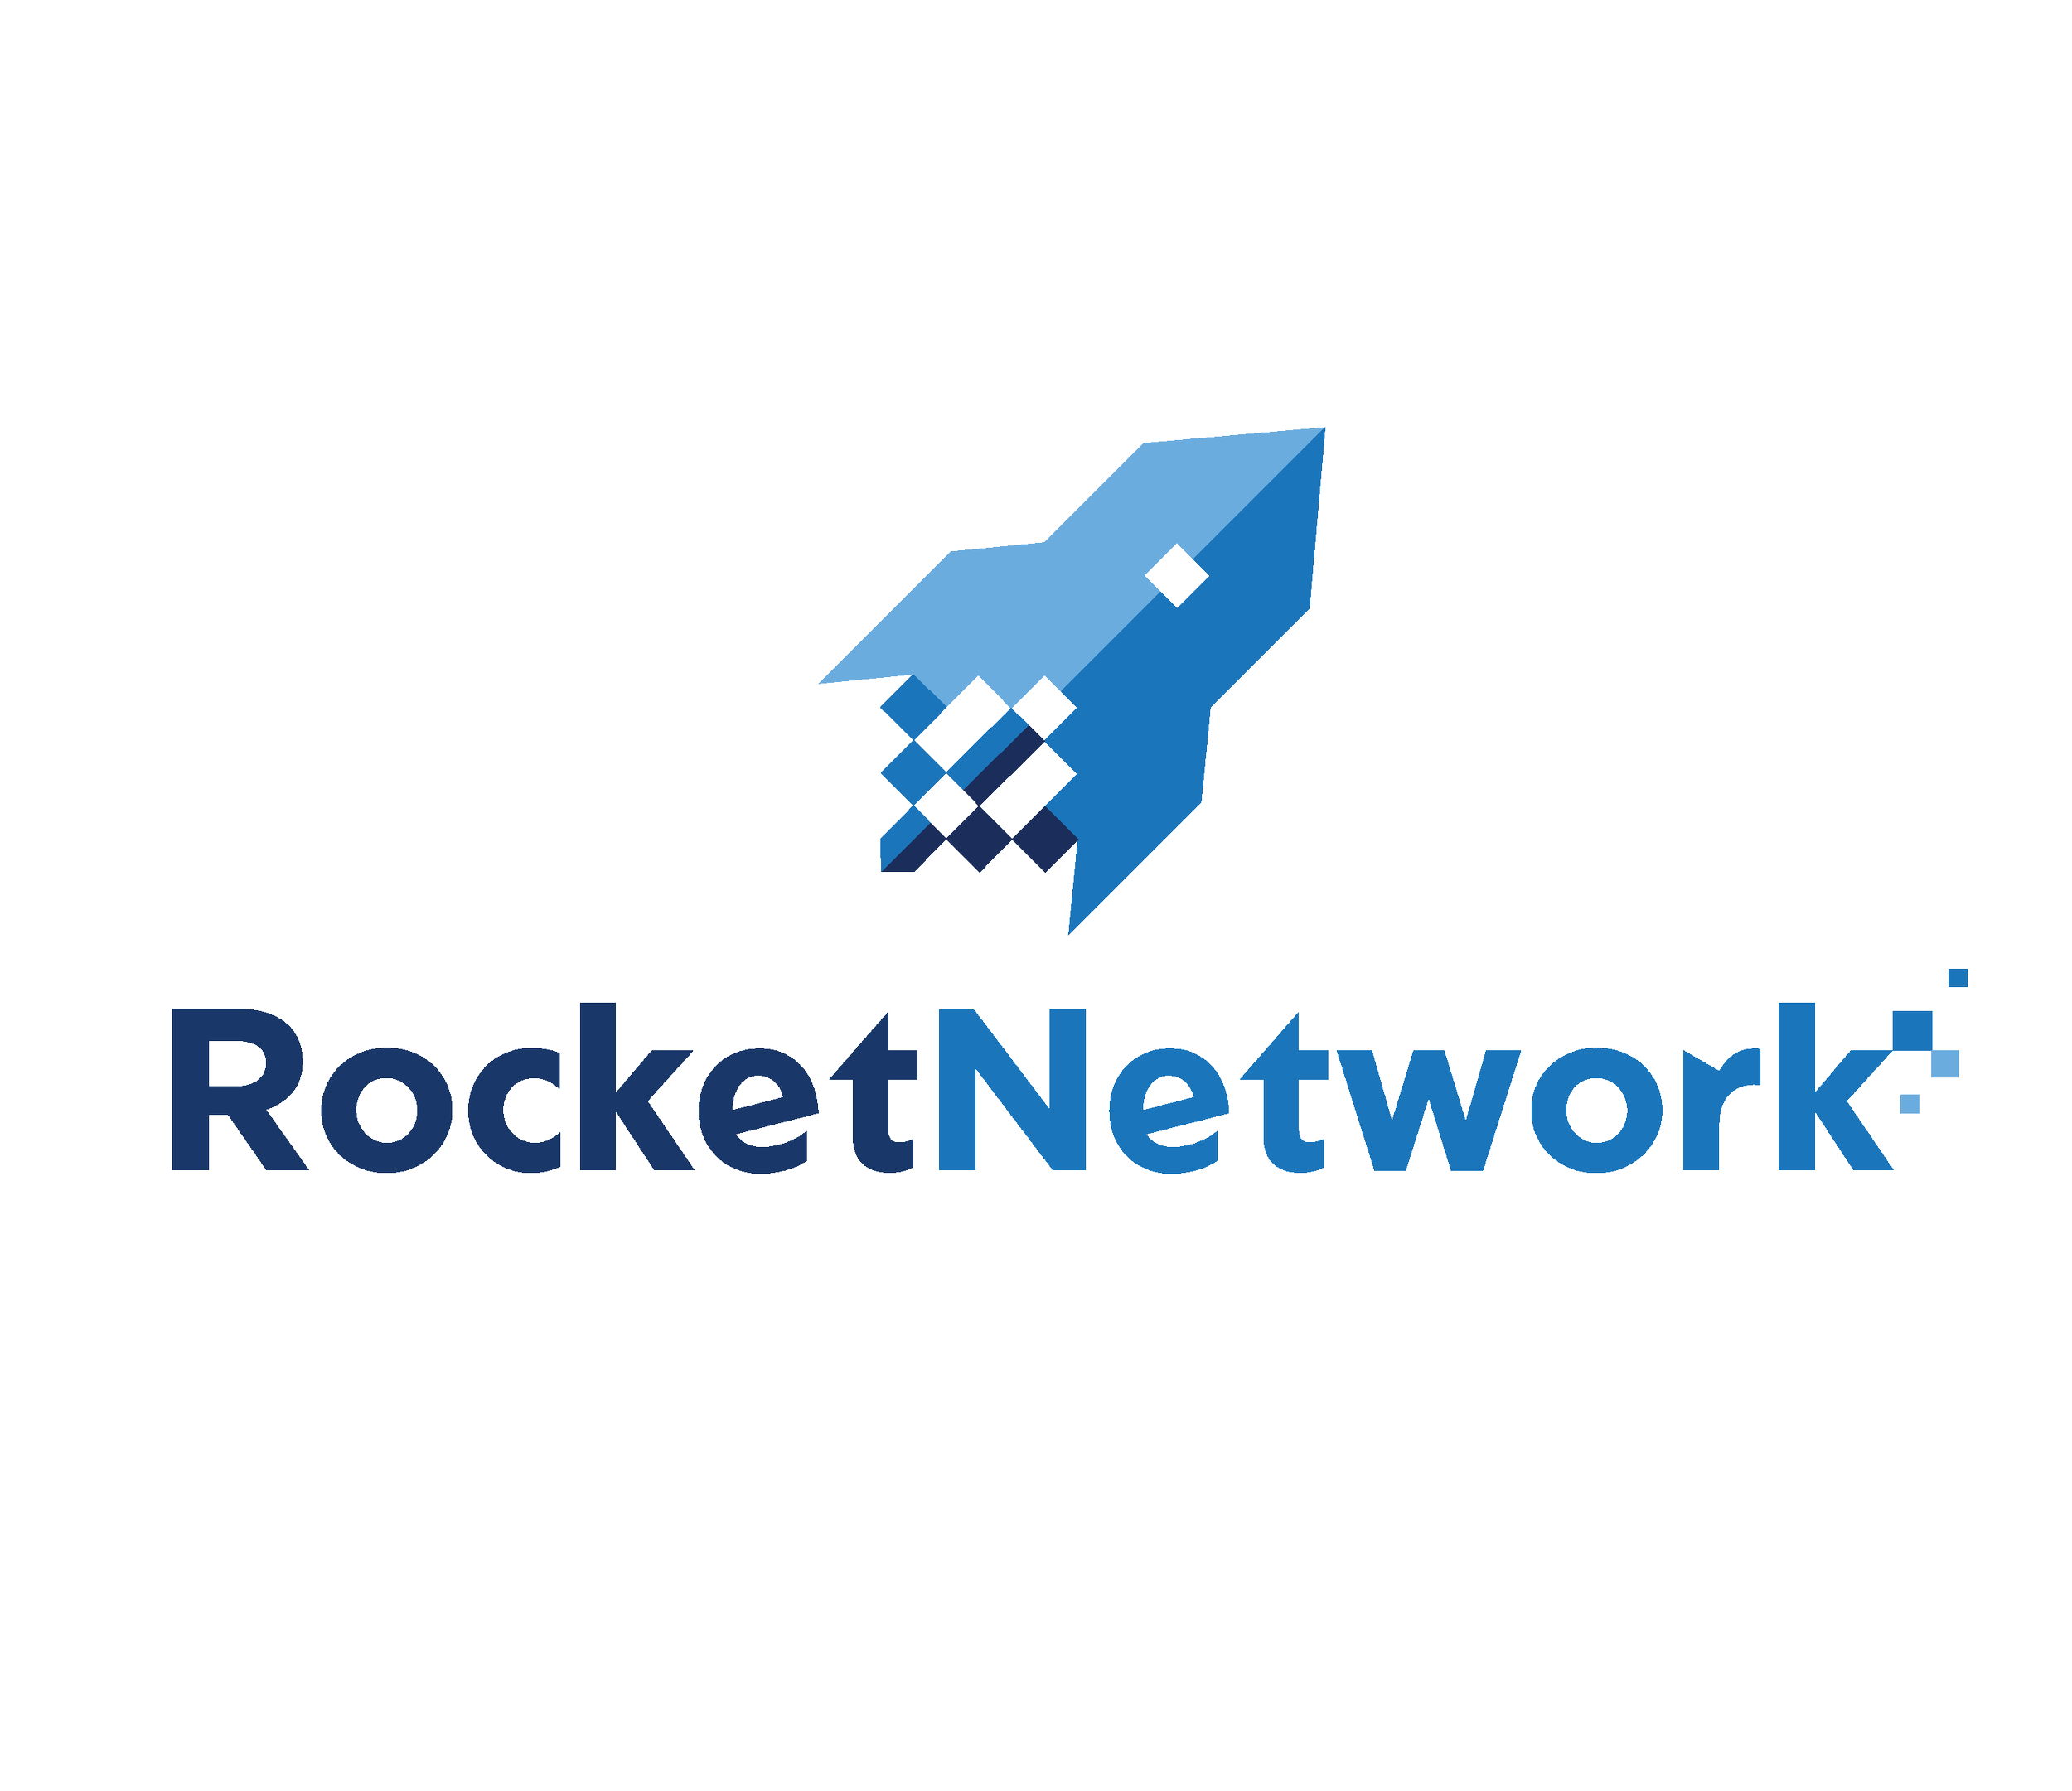 RocketNetworkk.png